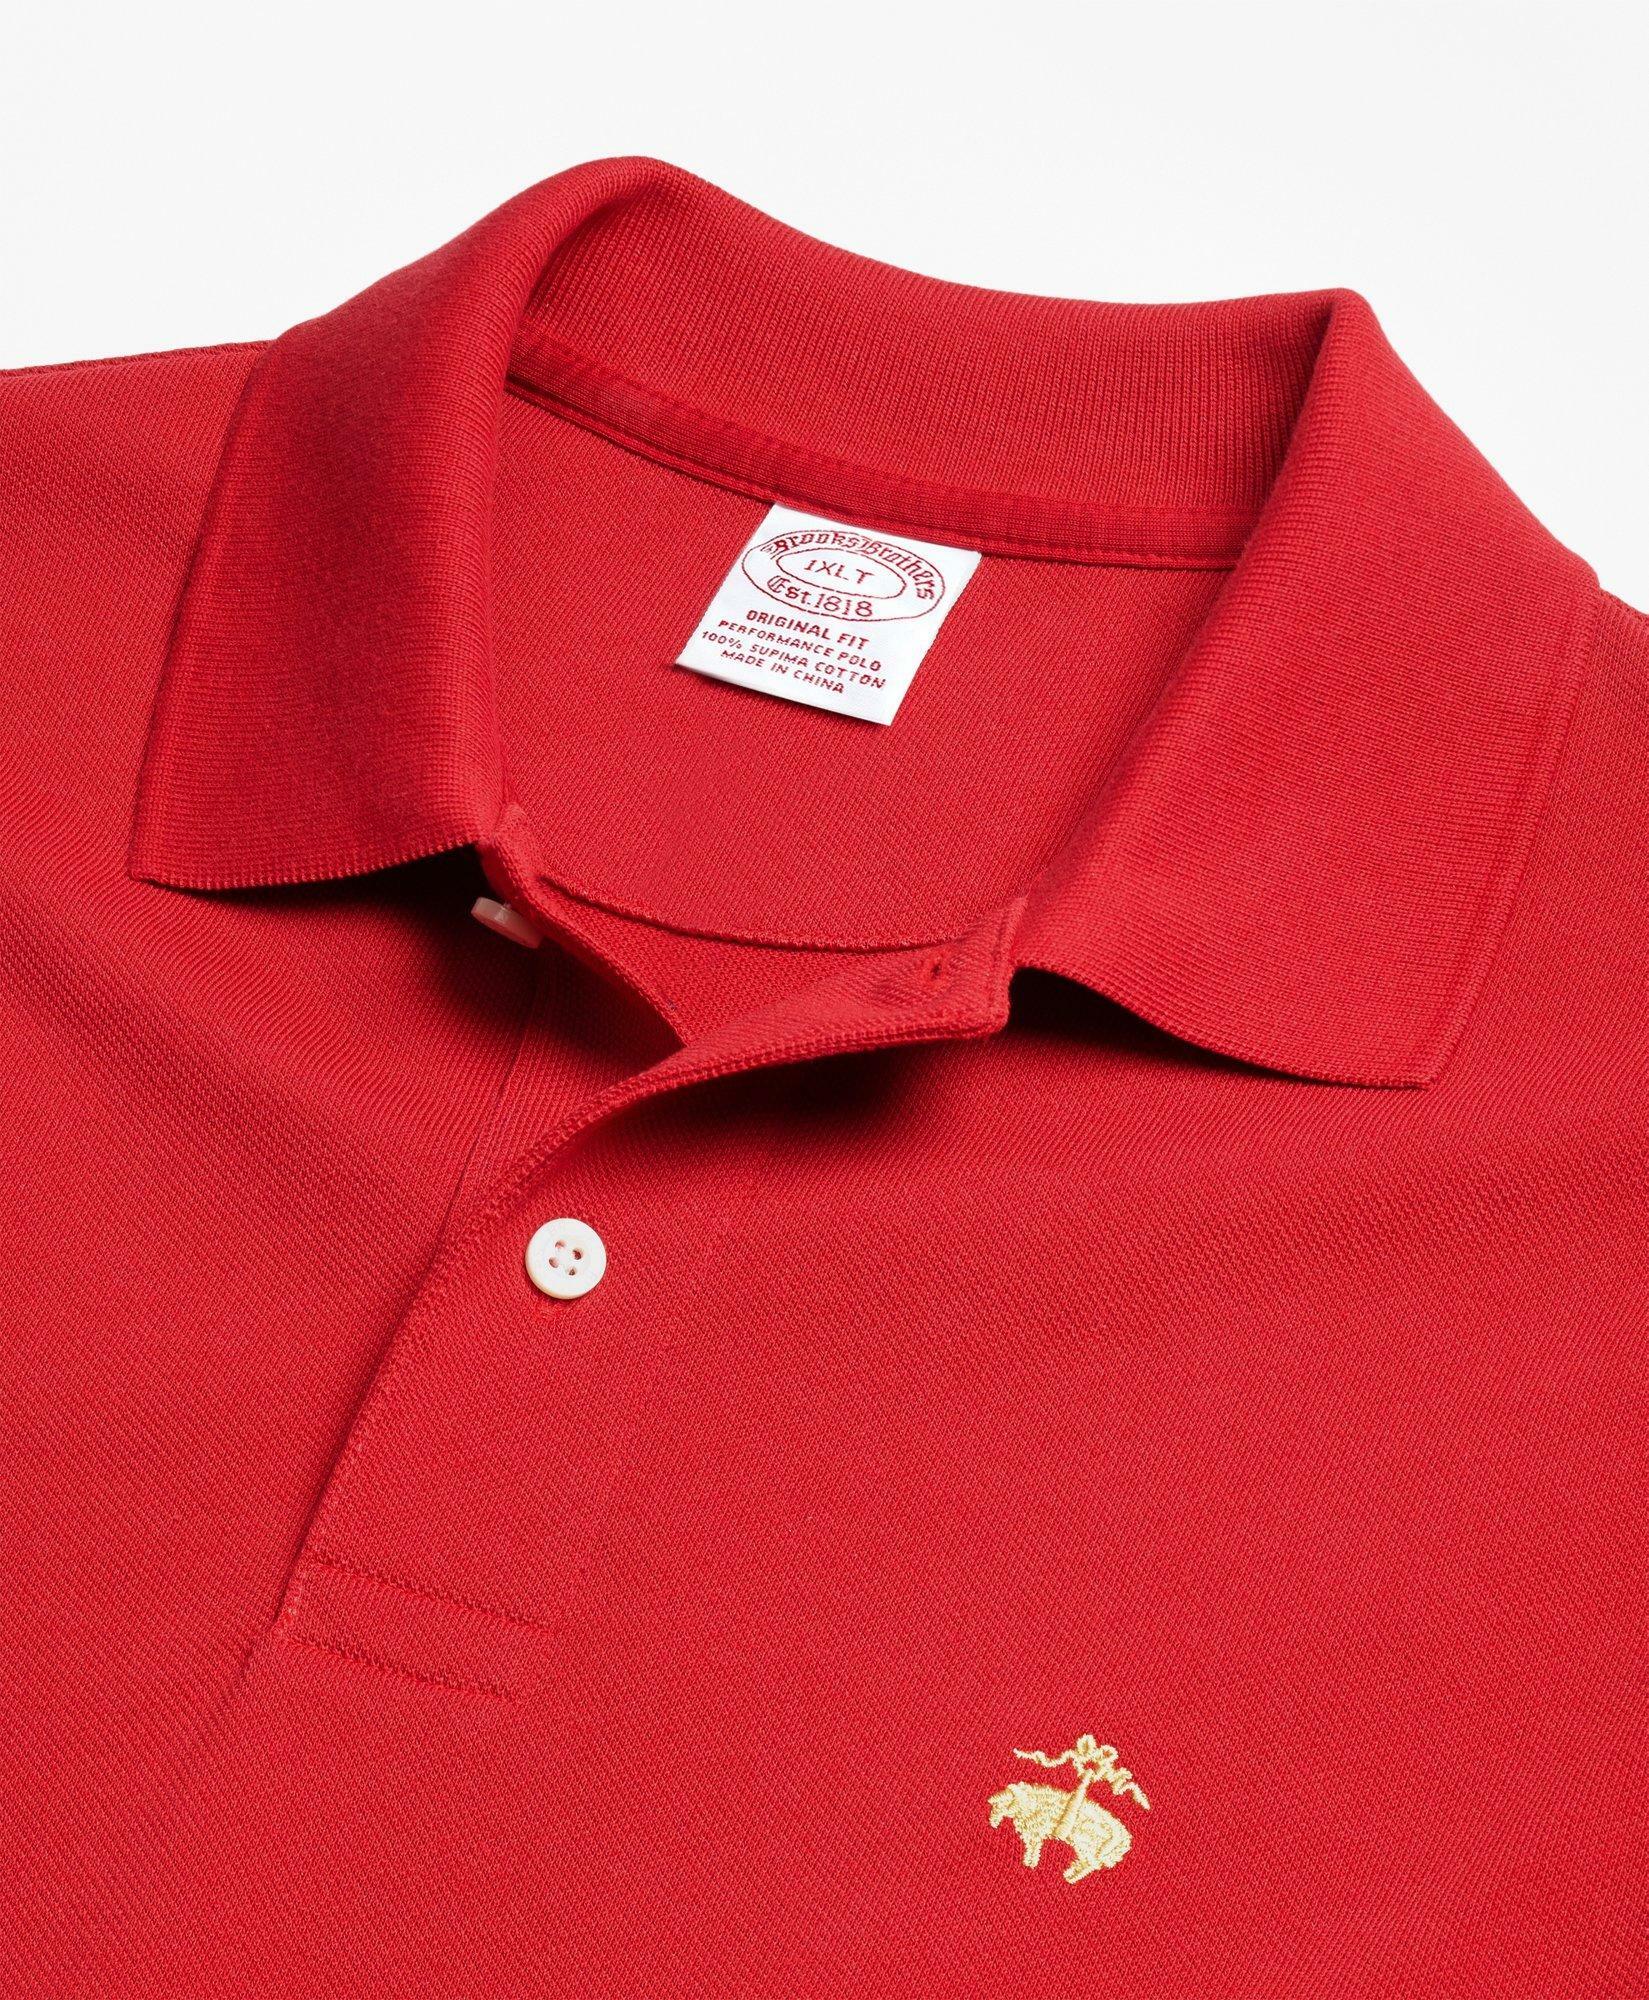 Brooks Brothers Men's Golden Fleece Big & Tall Supima Polo Shirt | Red